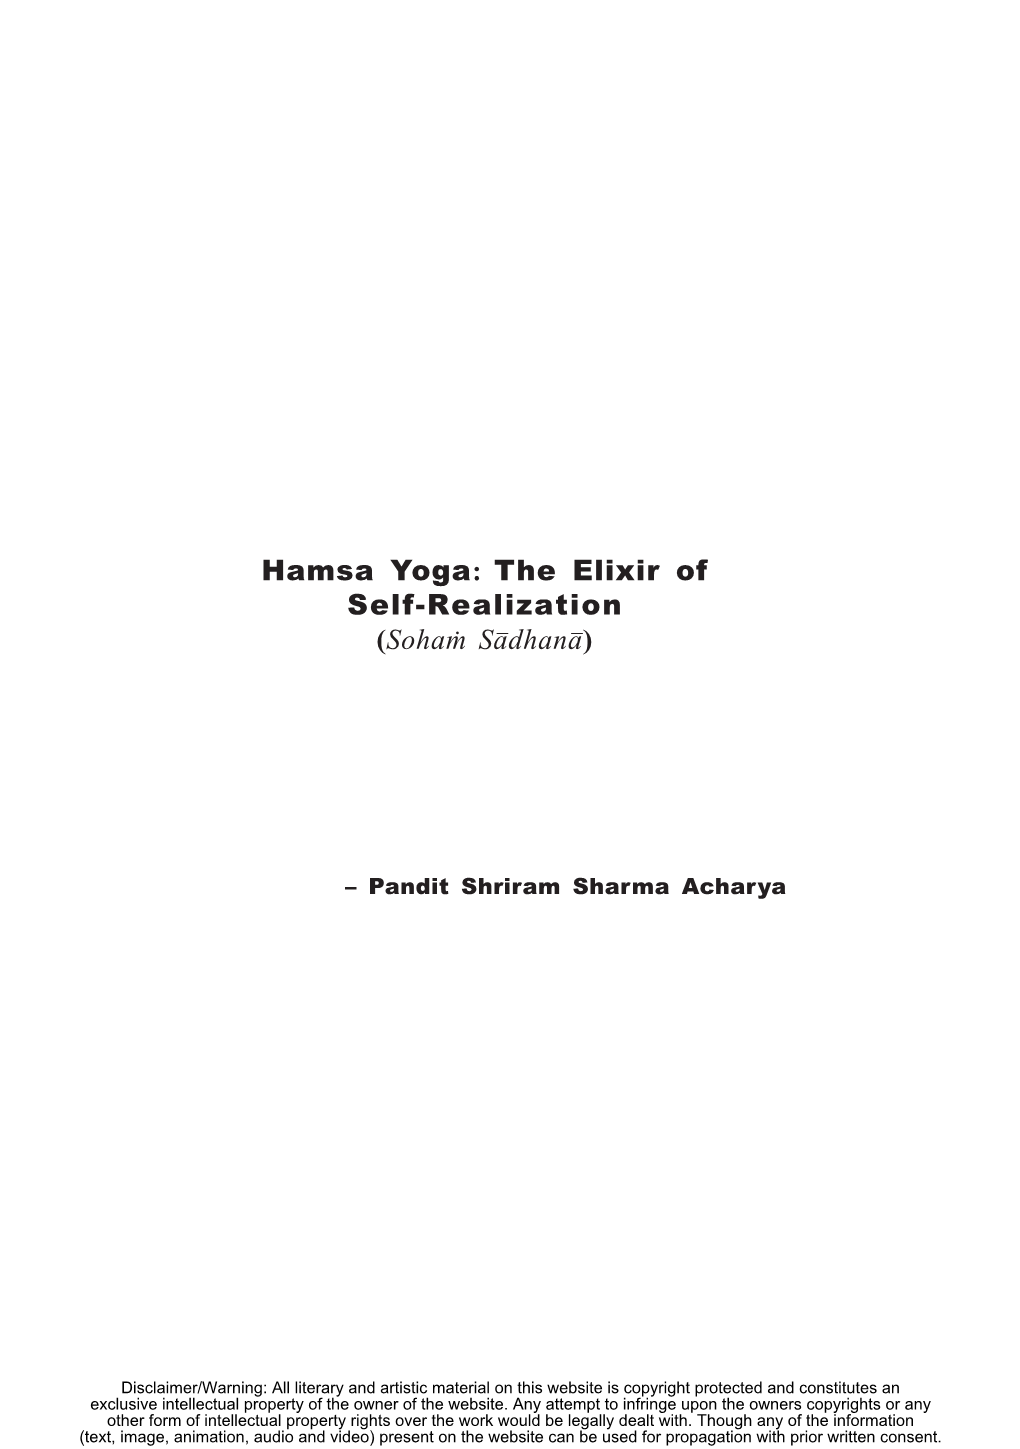 Hamsa Yoga: the Elixir of Self-Realization (Soha® S³dhan³)